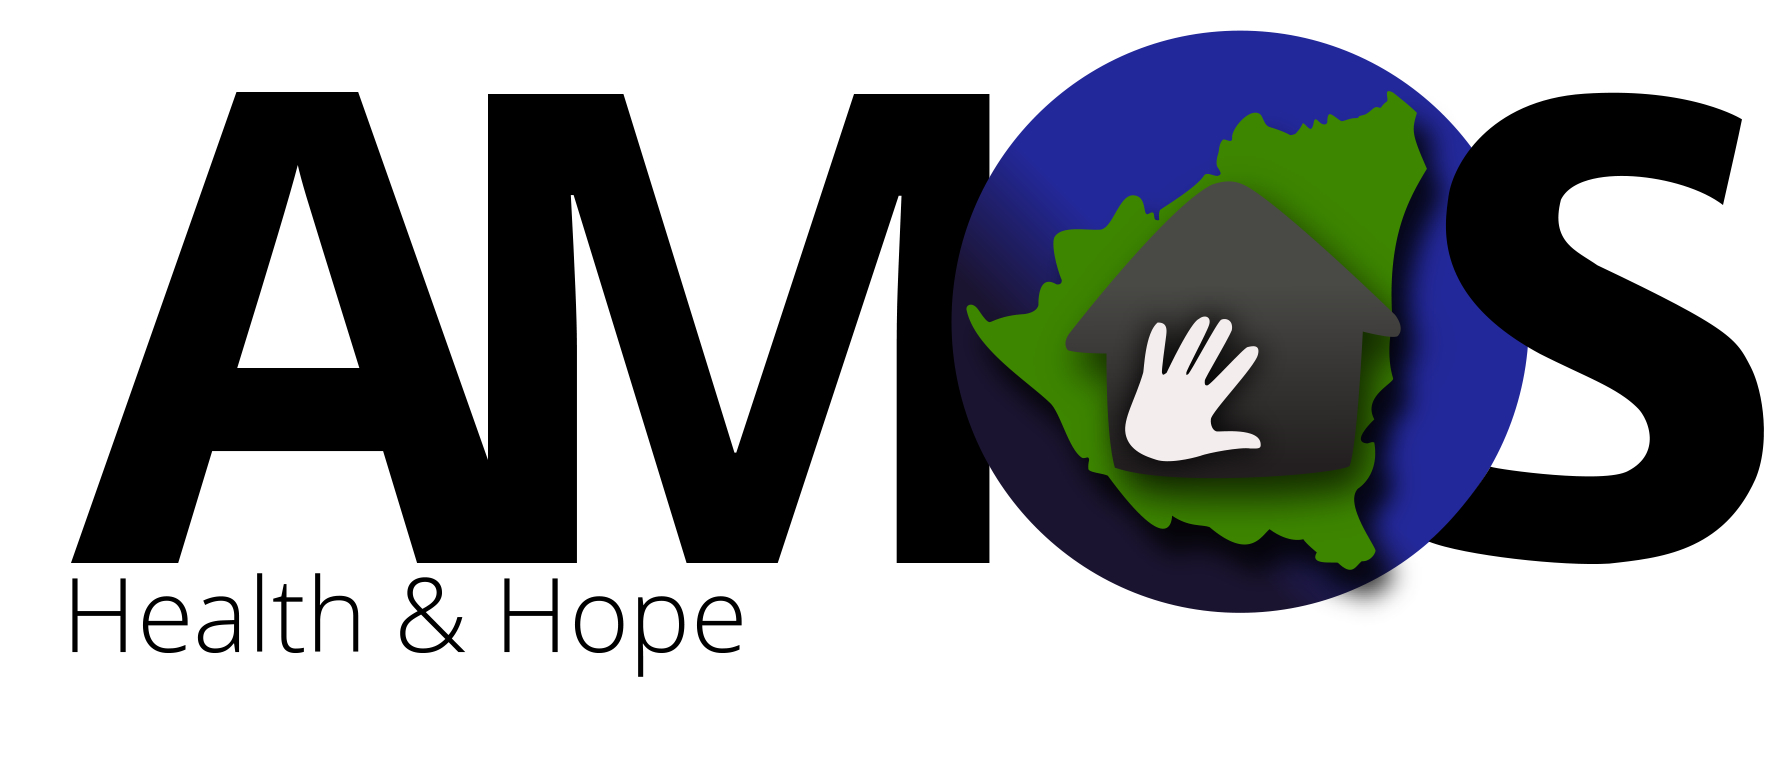 AMOS Official Logo.jpg